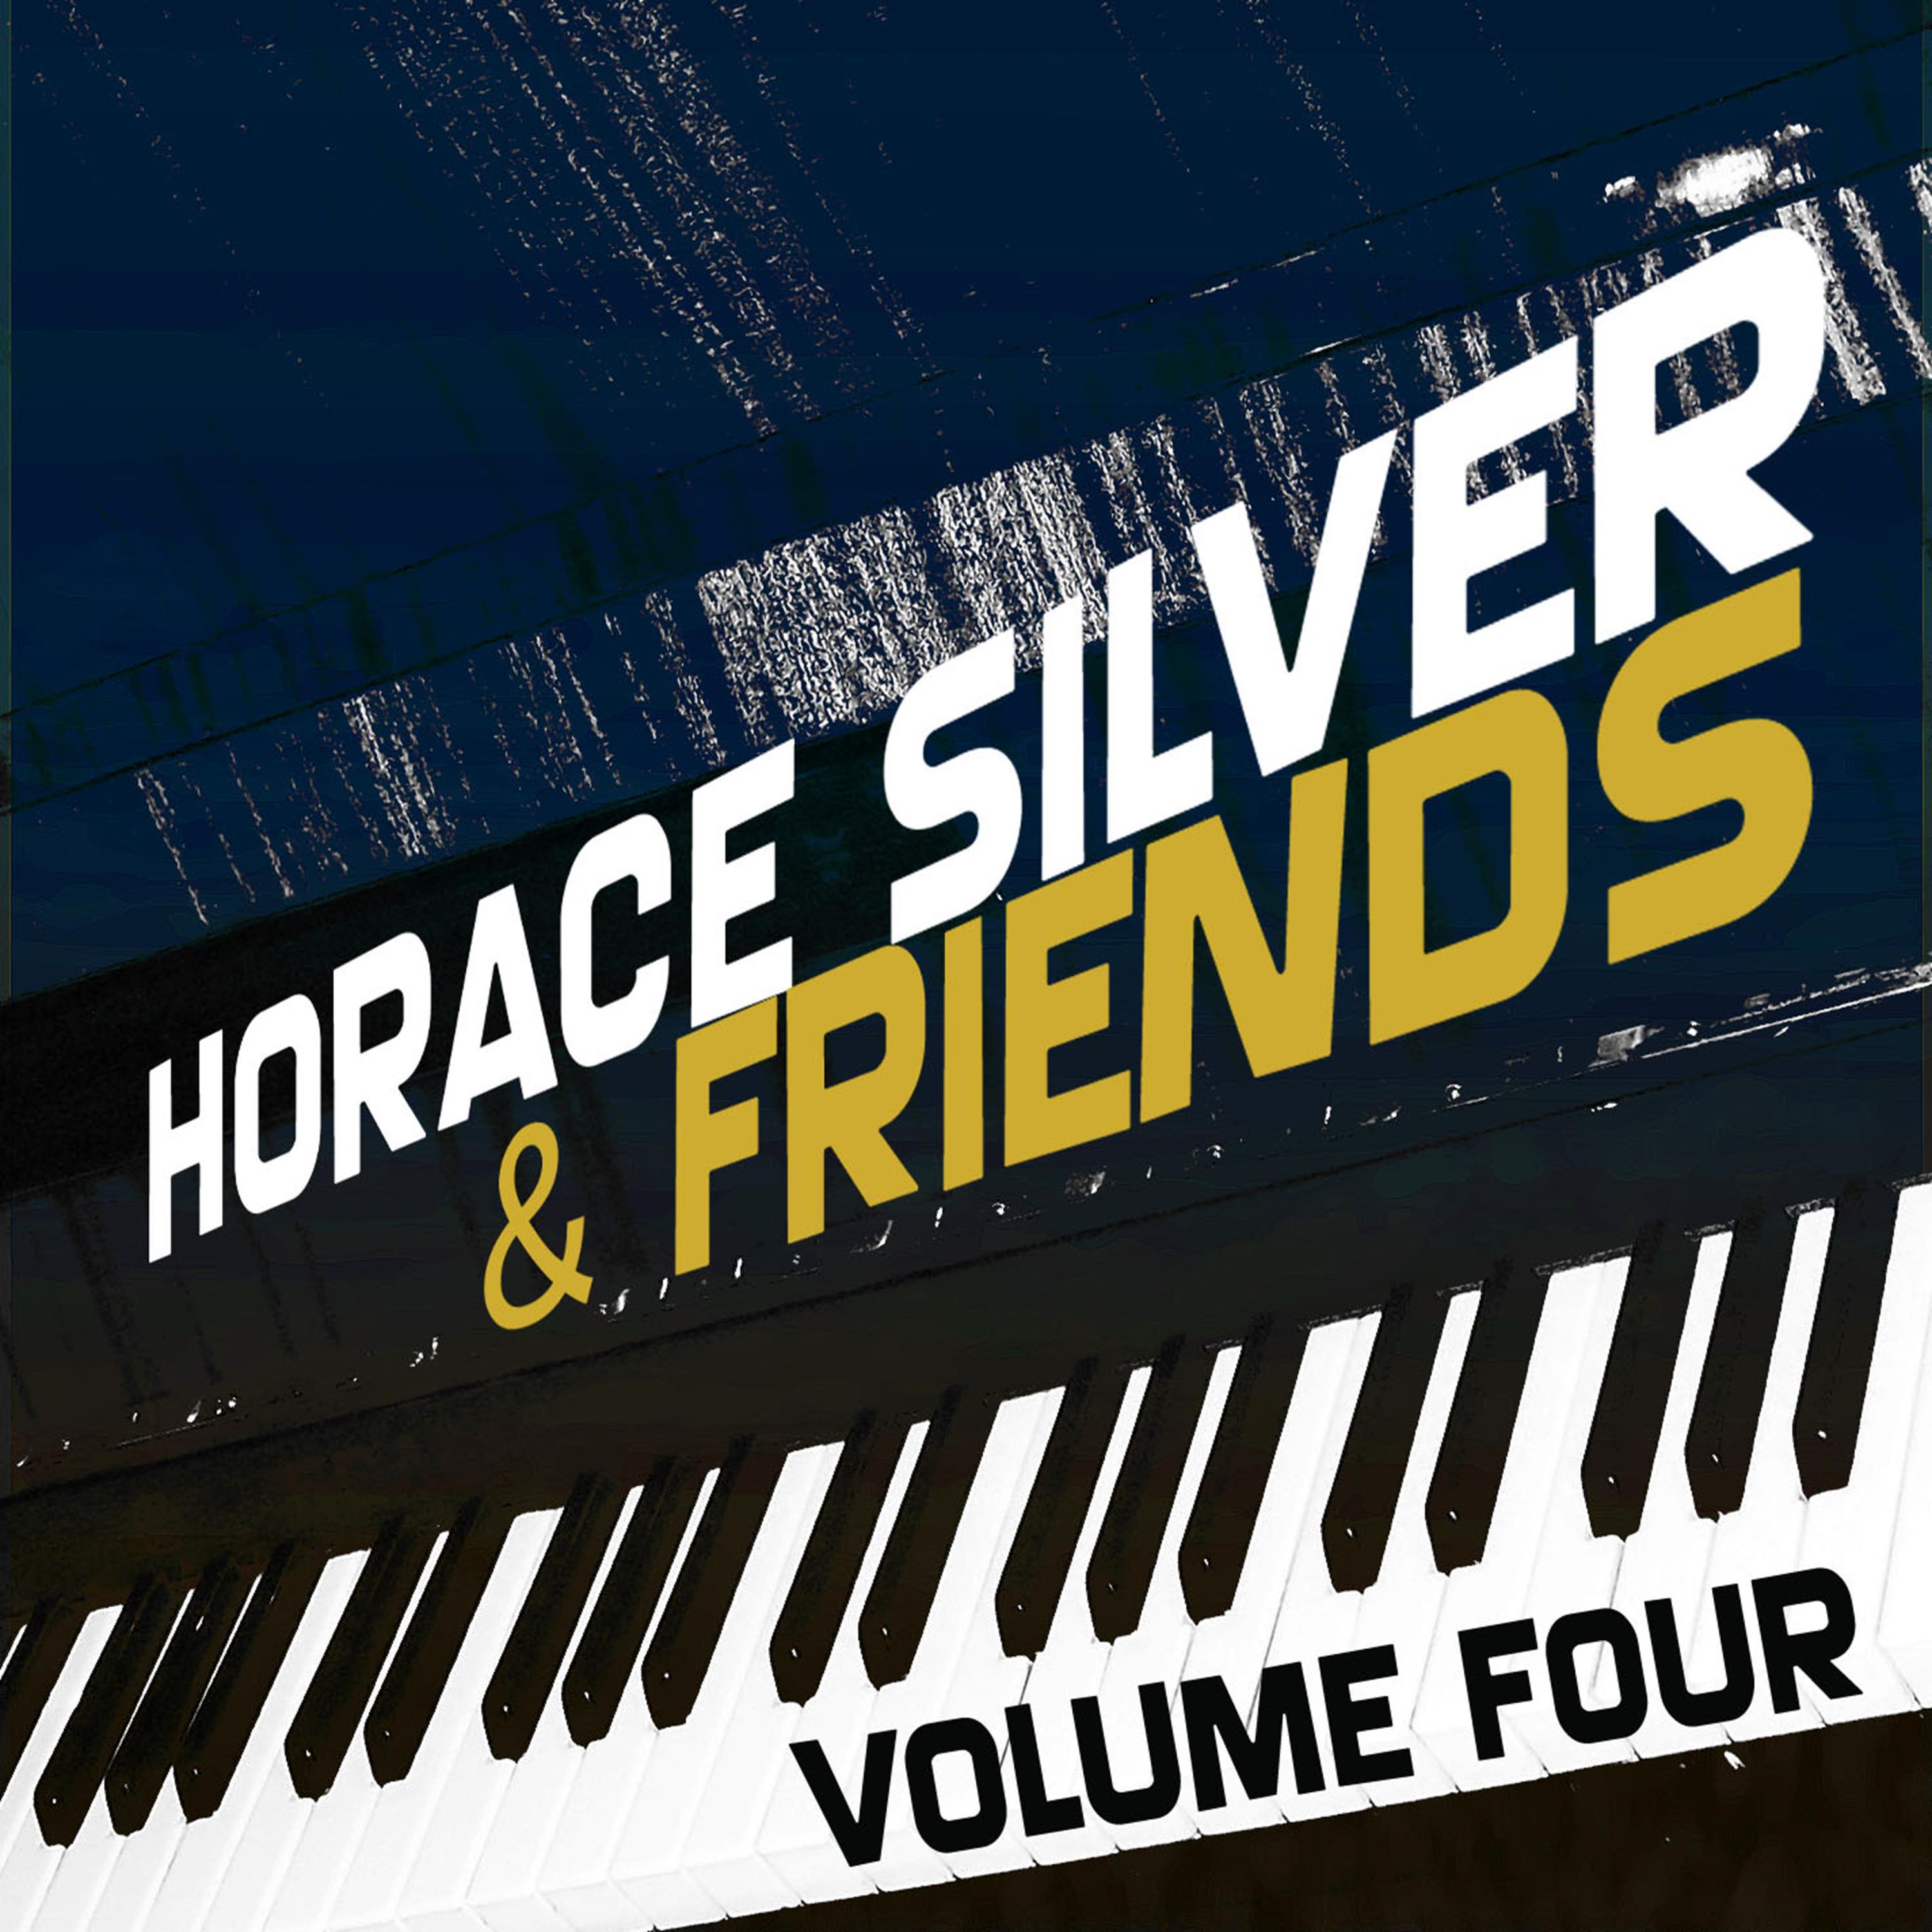 Horace Silver & Friends, Vol. 4